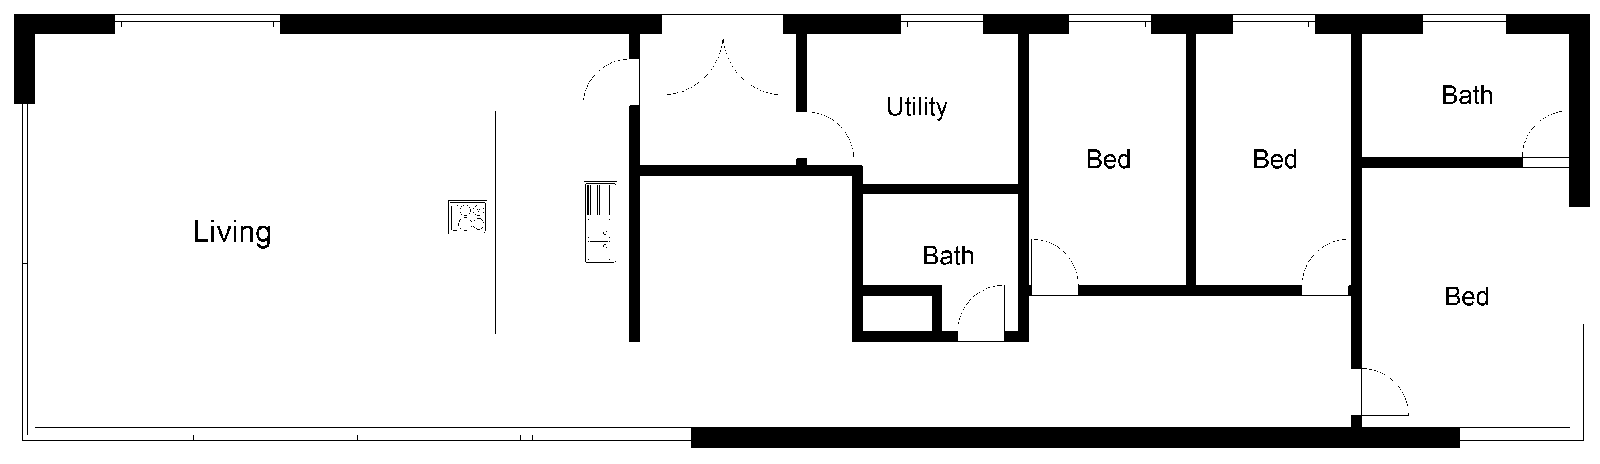 Ground floor house plans